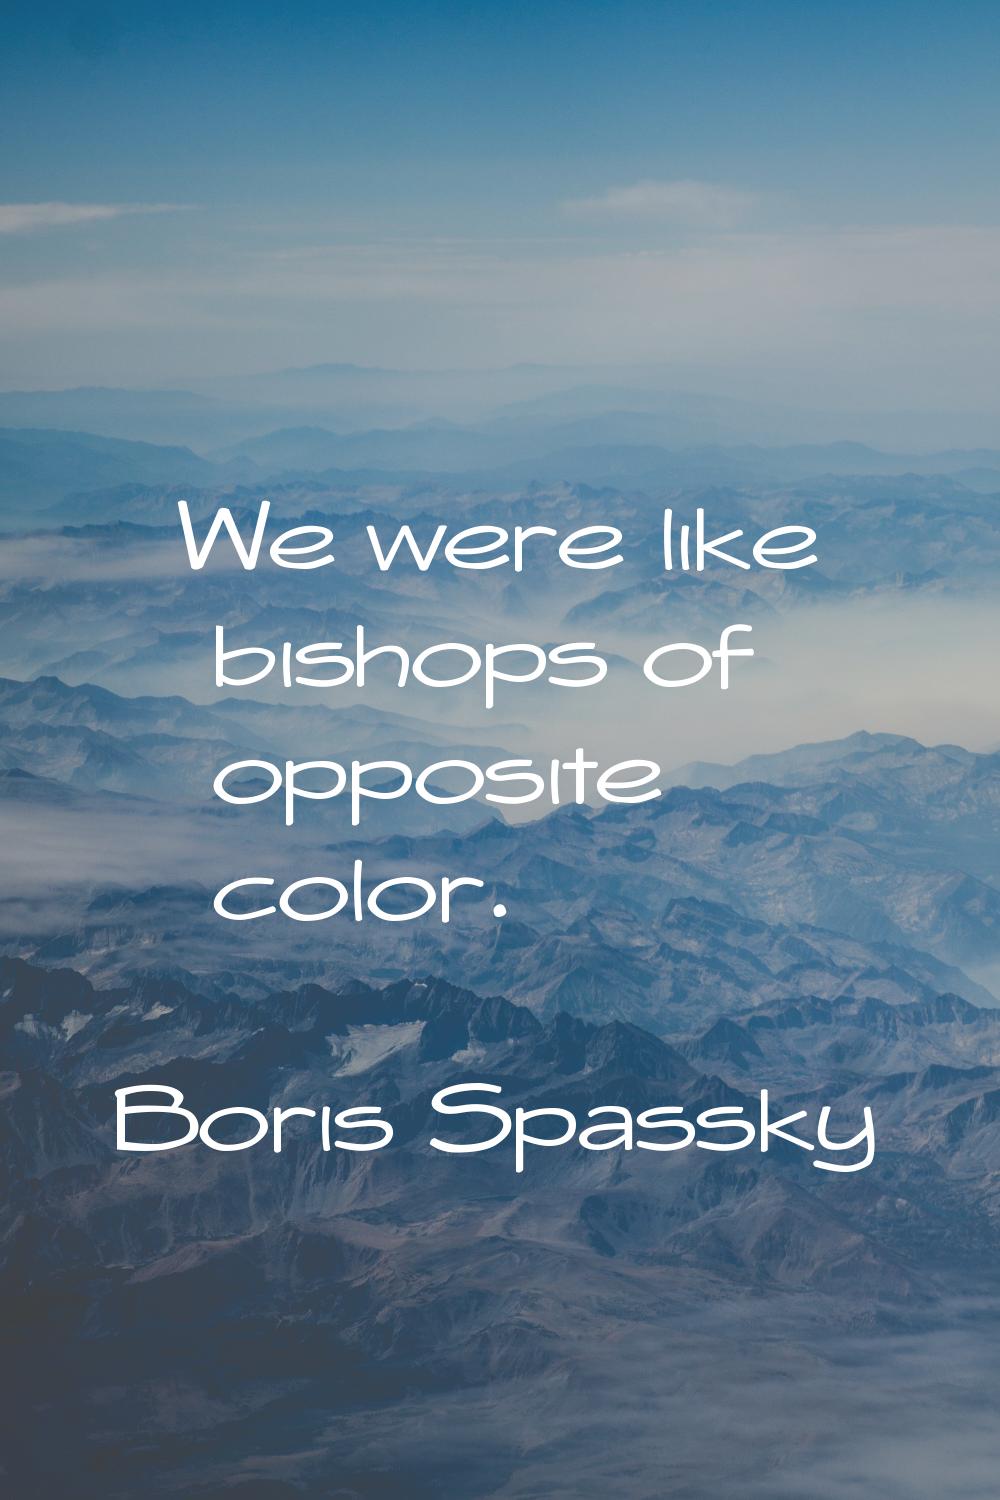 We were like bishops of opposite color.